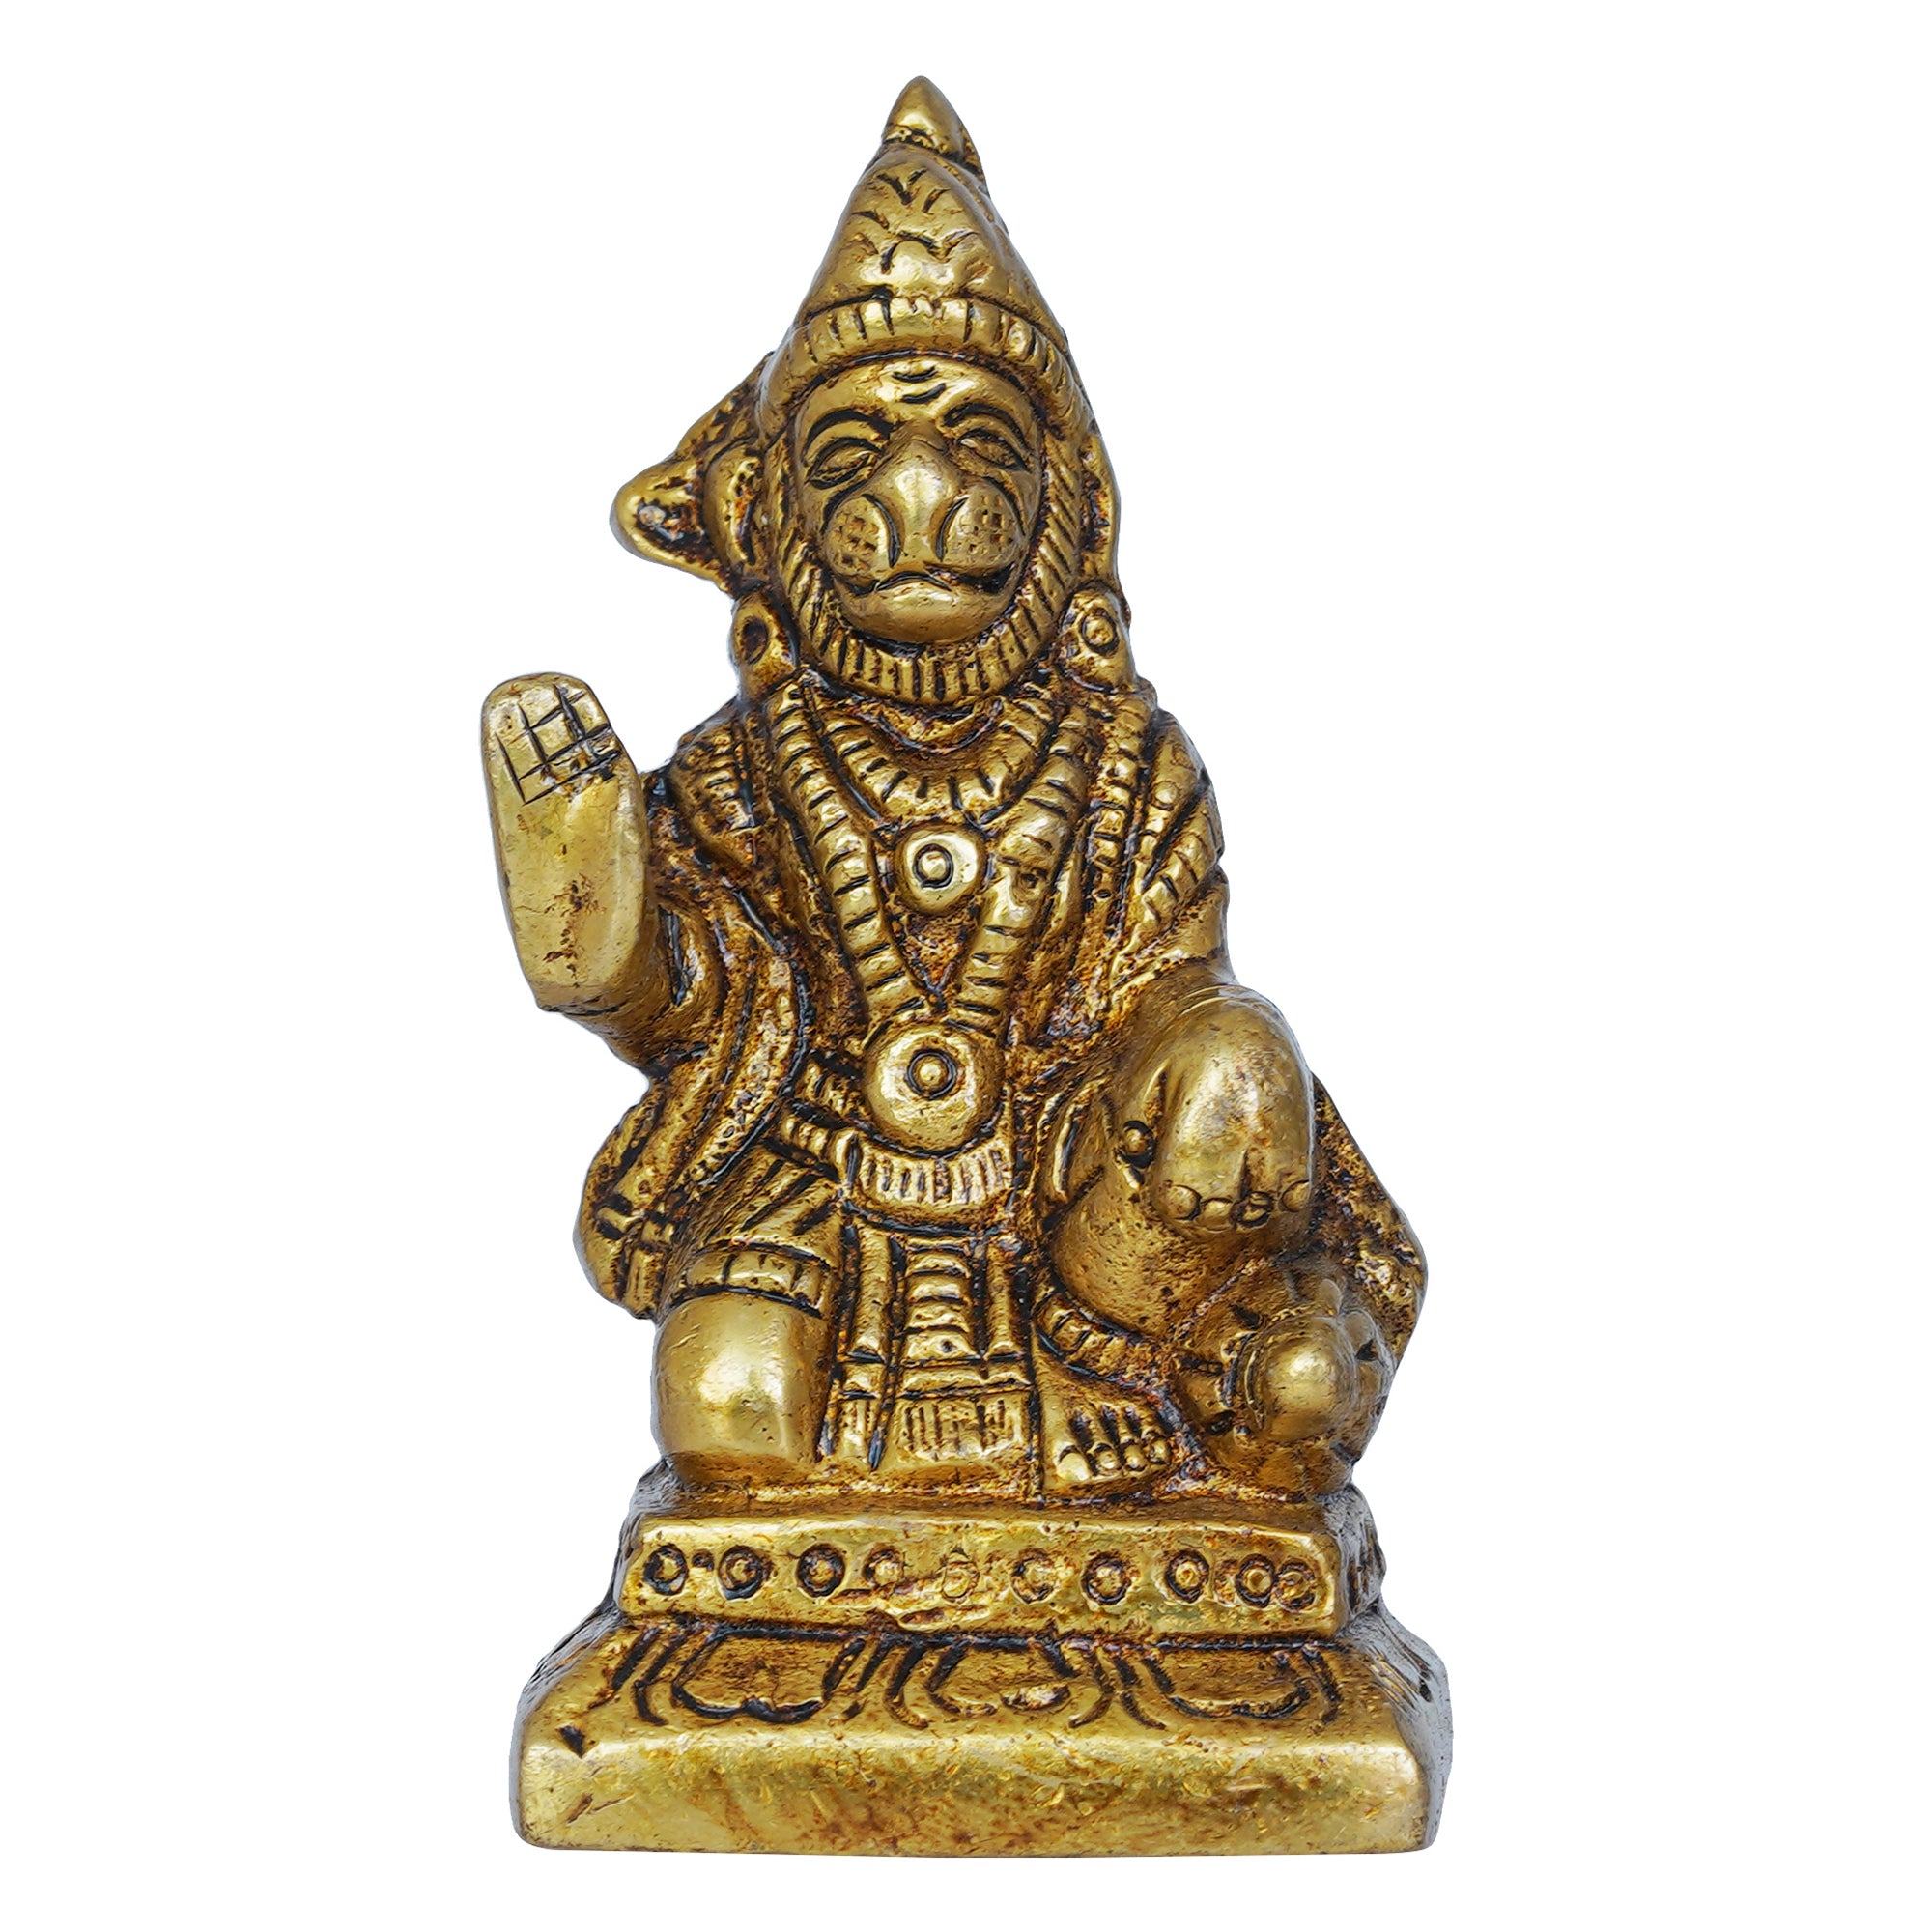 Golden Brass Blessing Lord Hanuman Statue Murti - Hindu God Idol for Home, Office, Temple Mandir - Hanuman Jayanti Gift 2